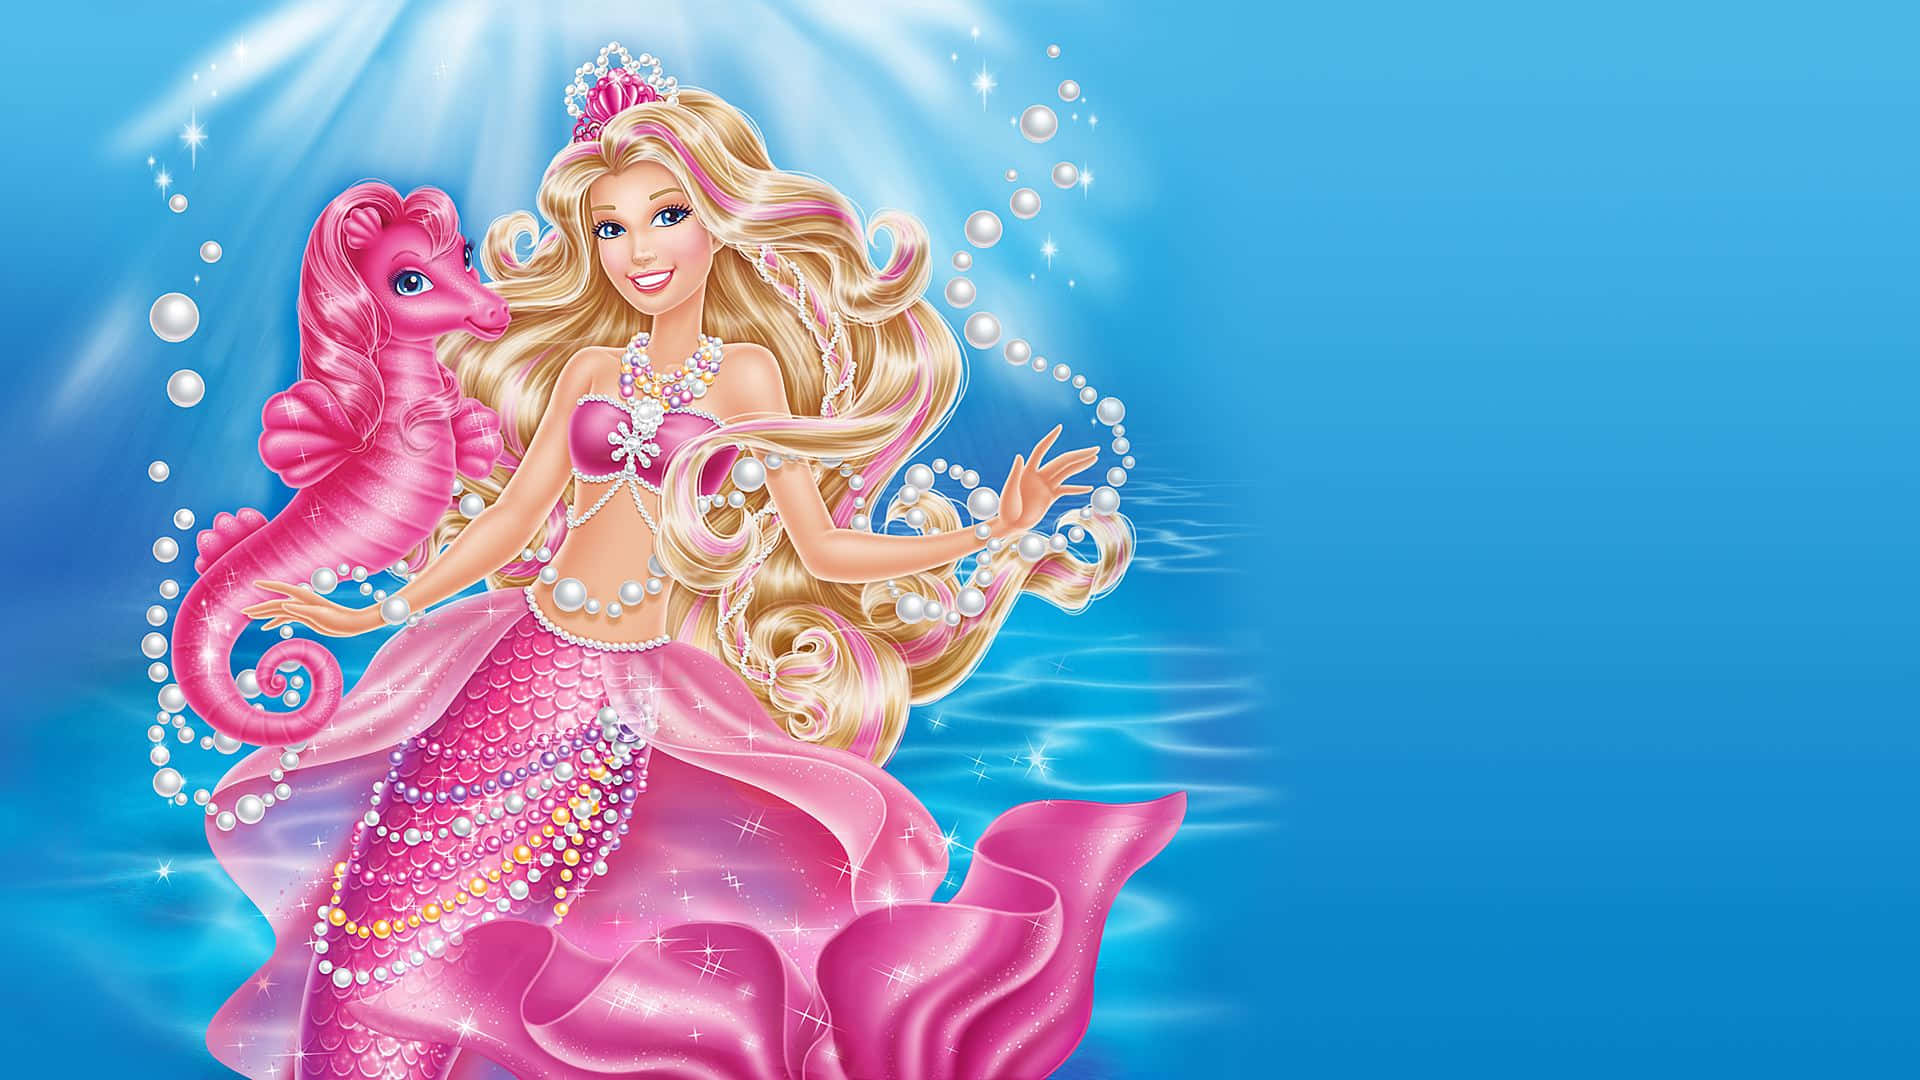 Download Plano De Fundo Da Barbie Wallpaper